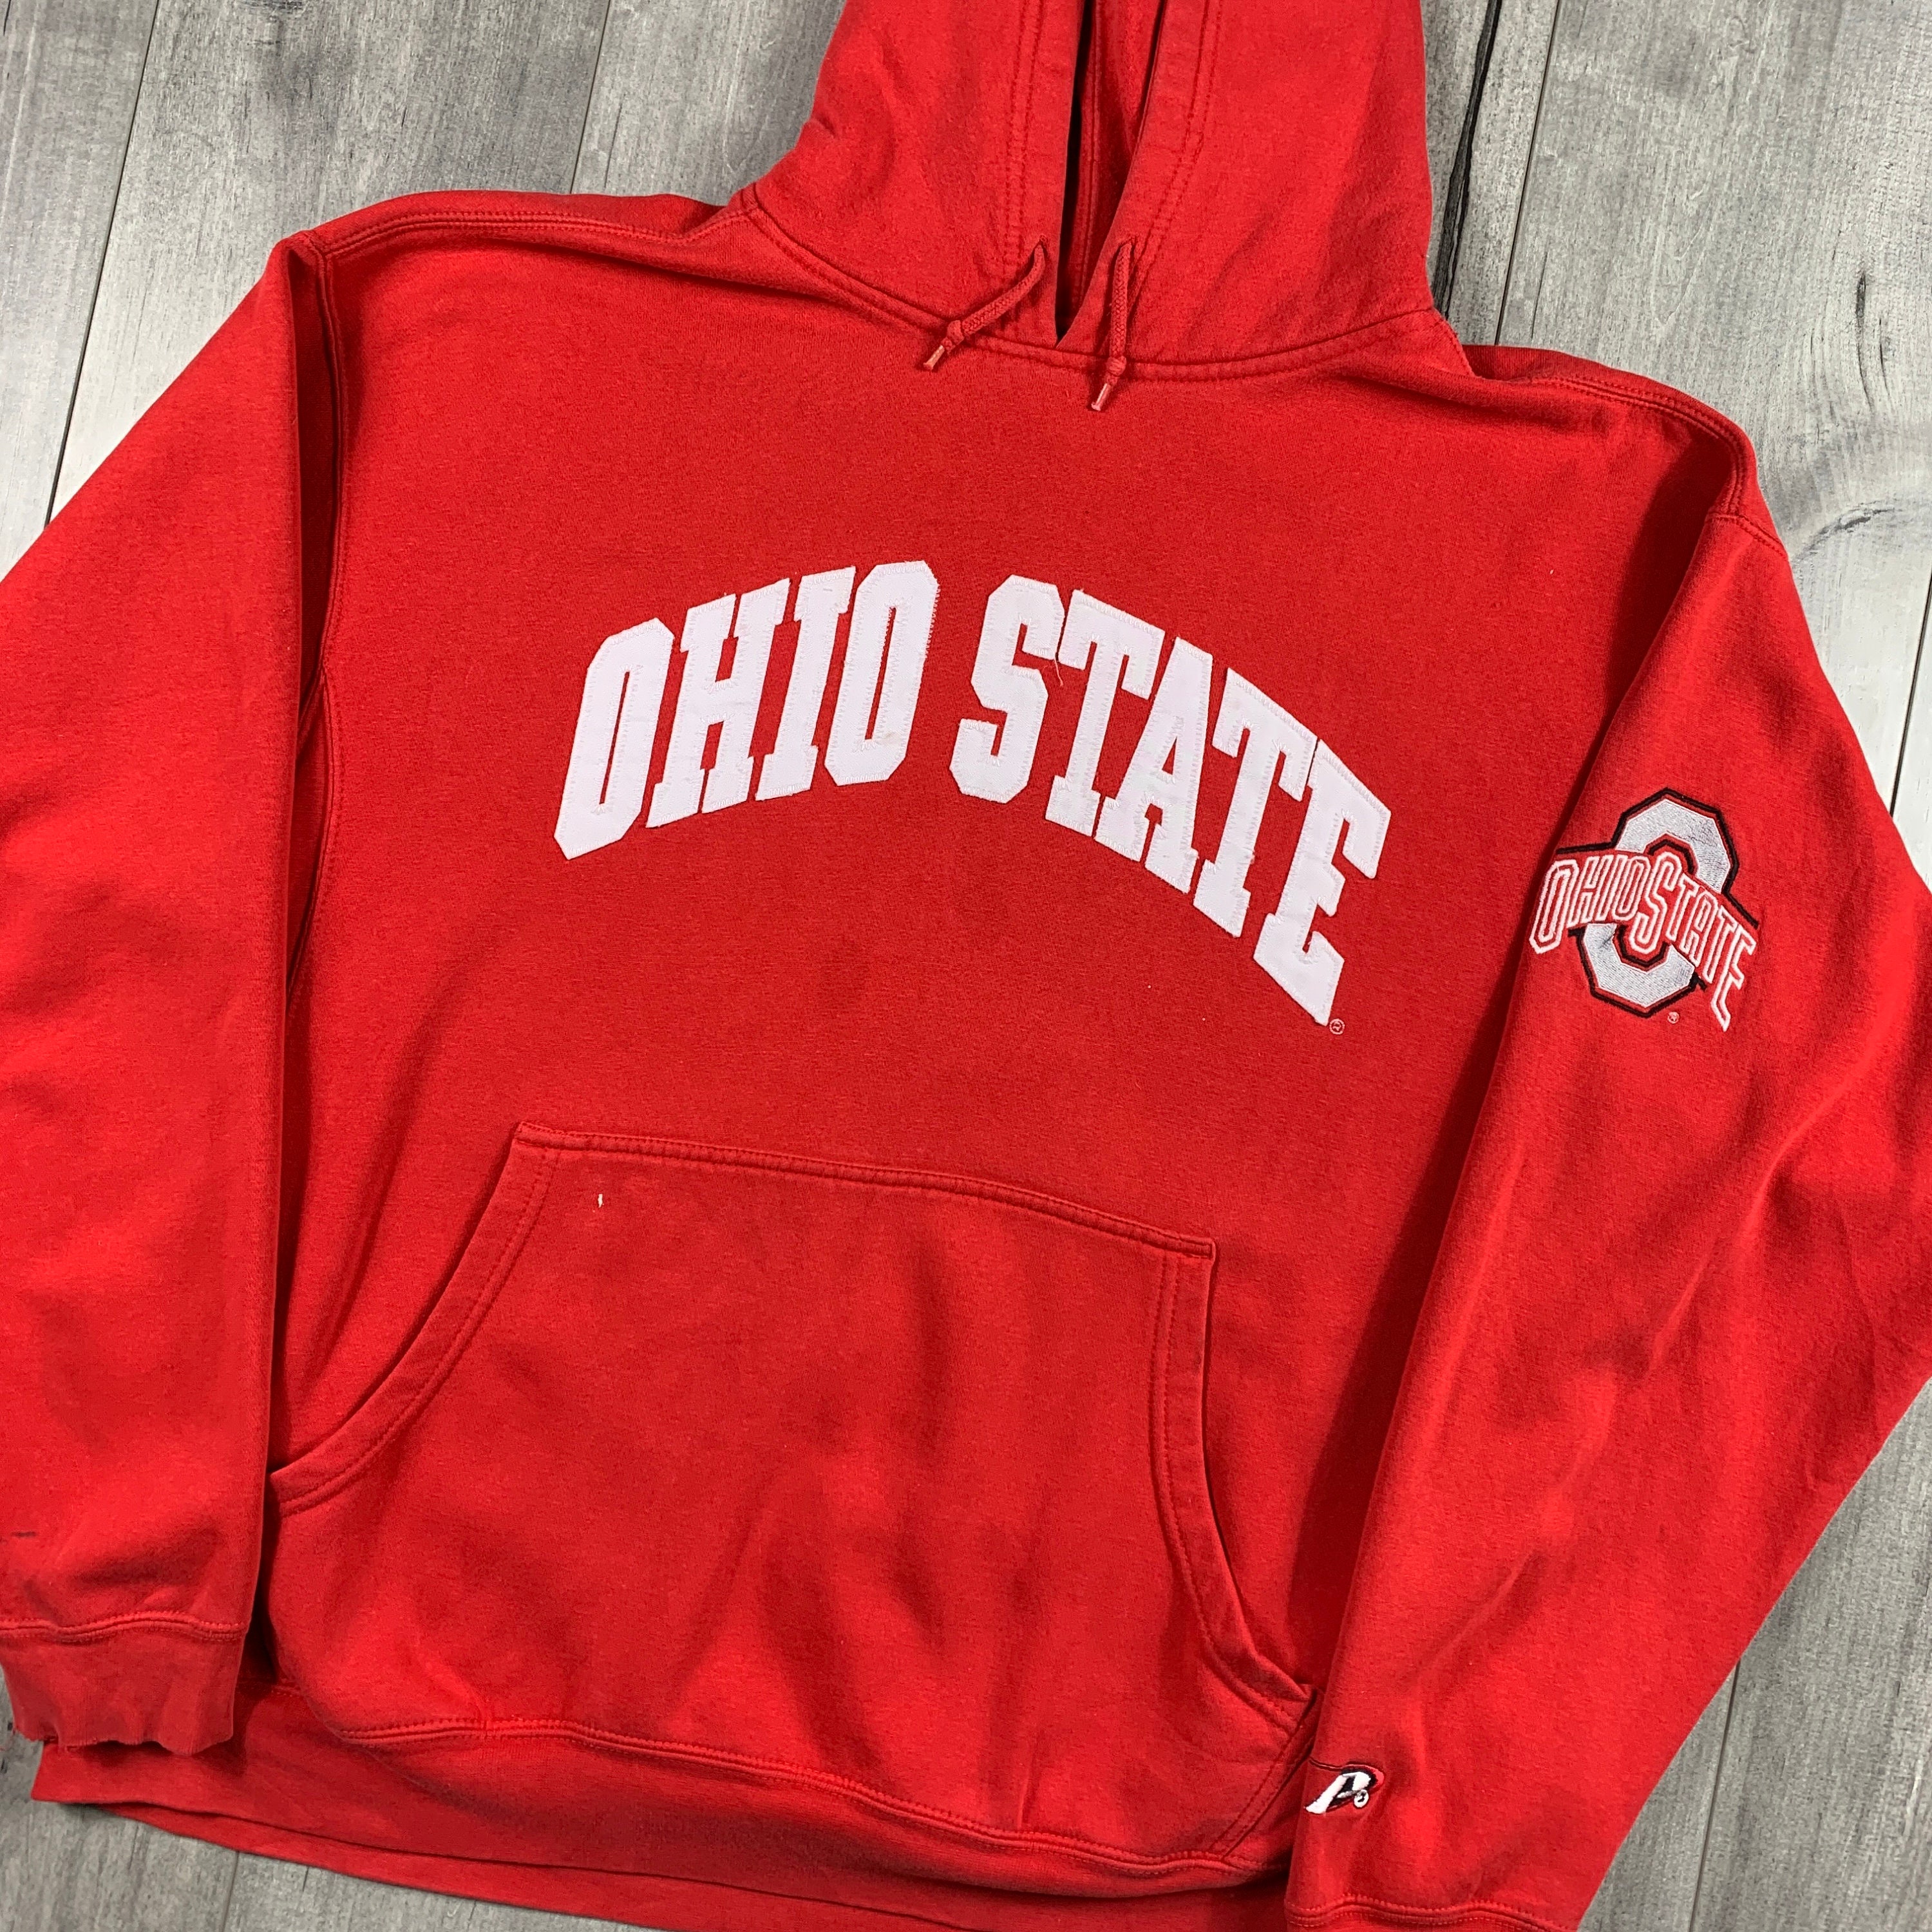 Ohio State Varsity Turtleneck Sweater